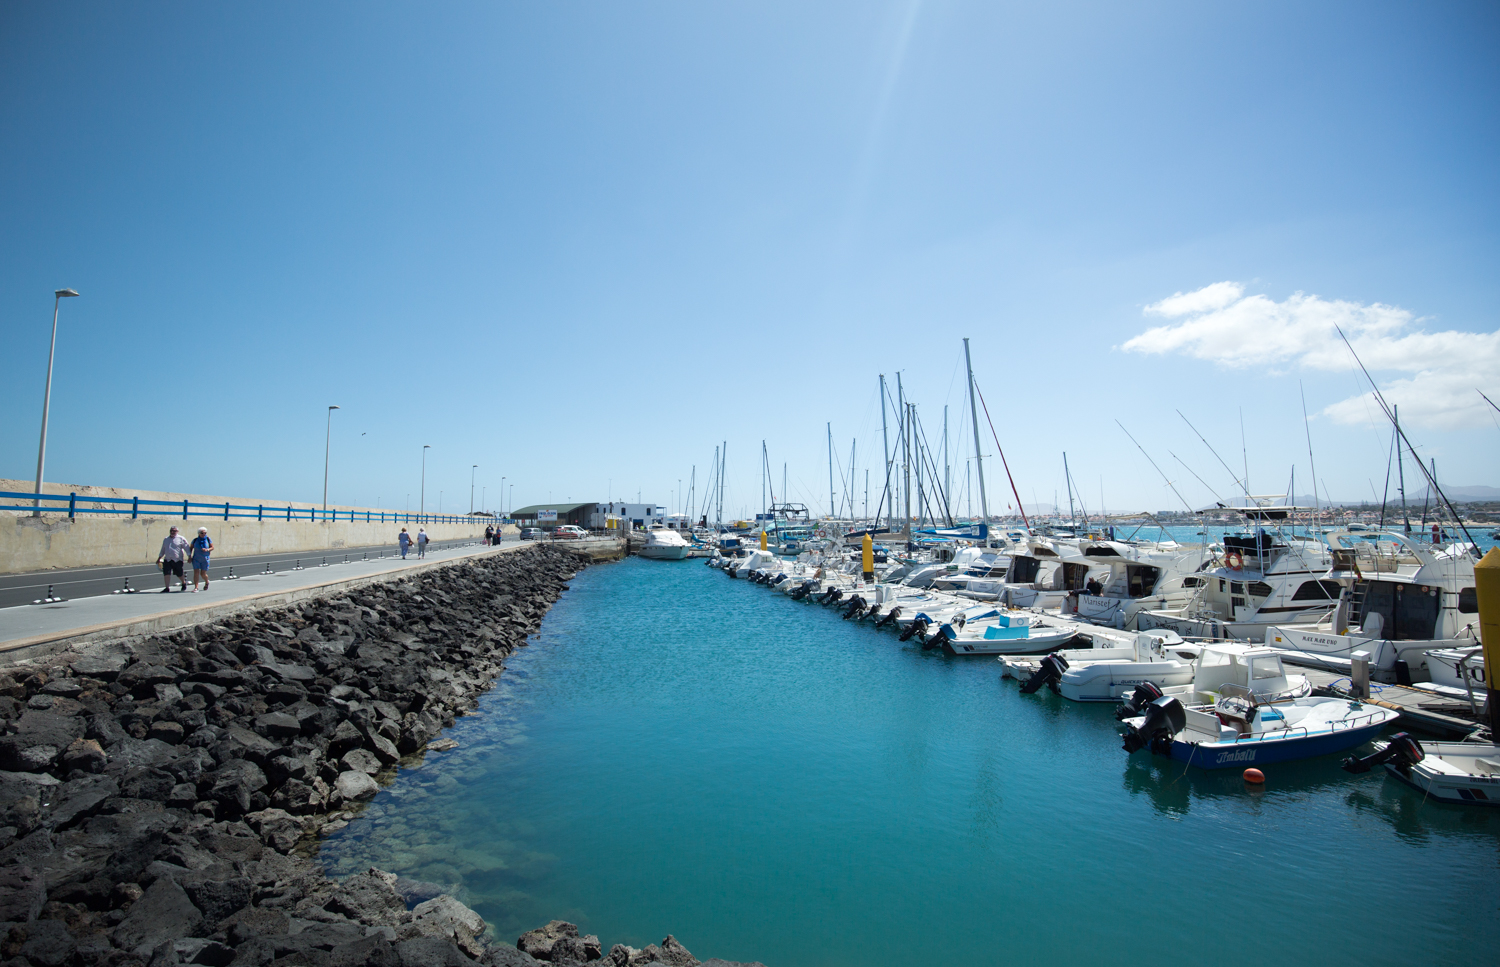 The harbour in Corralejo, Fuerteventura